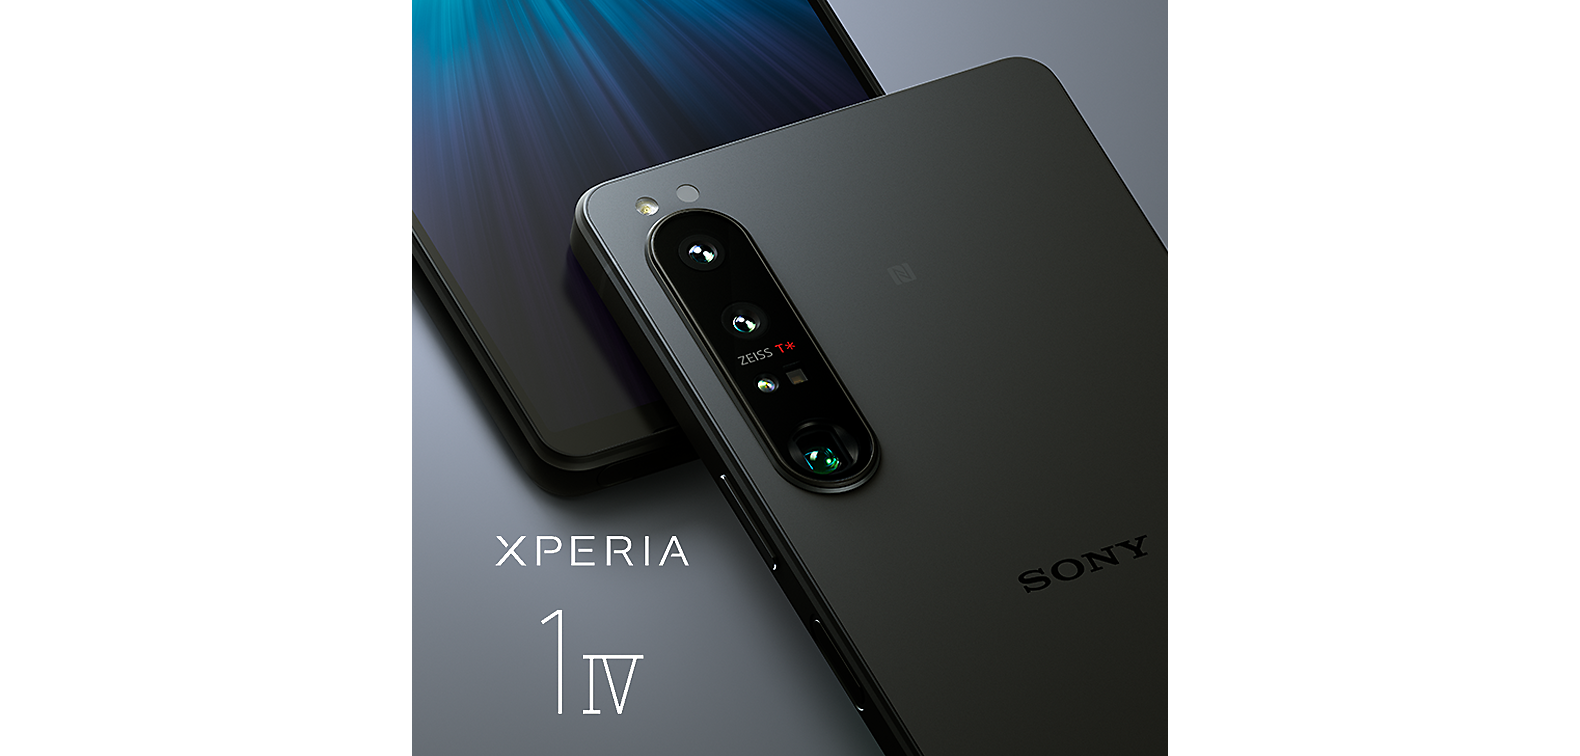 Due smartphone Xperia 1 IV su sfondo grigio accanto al logo Xperia 1 IV.